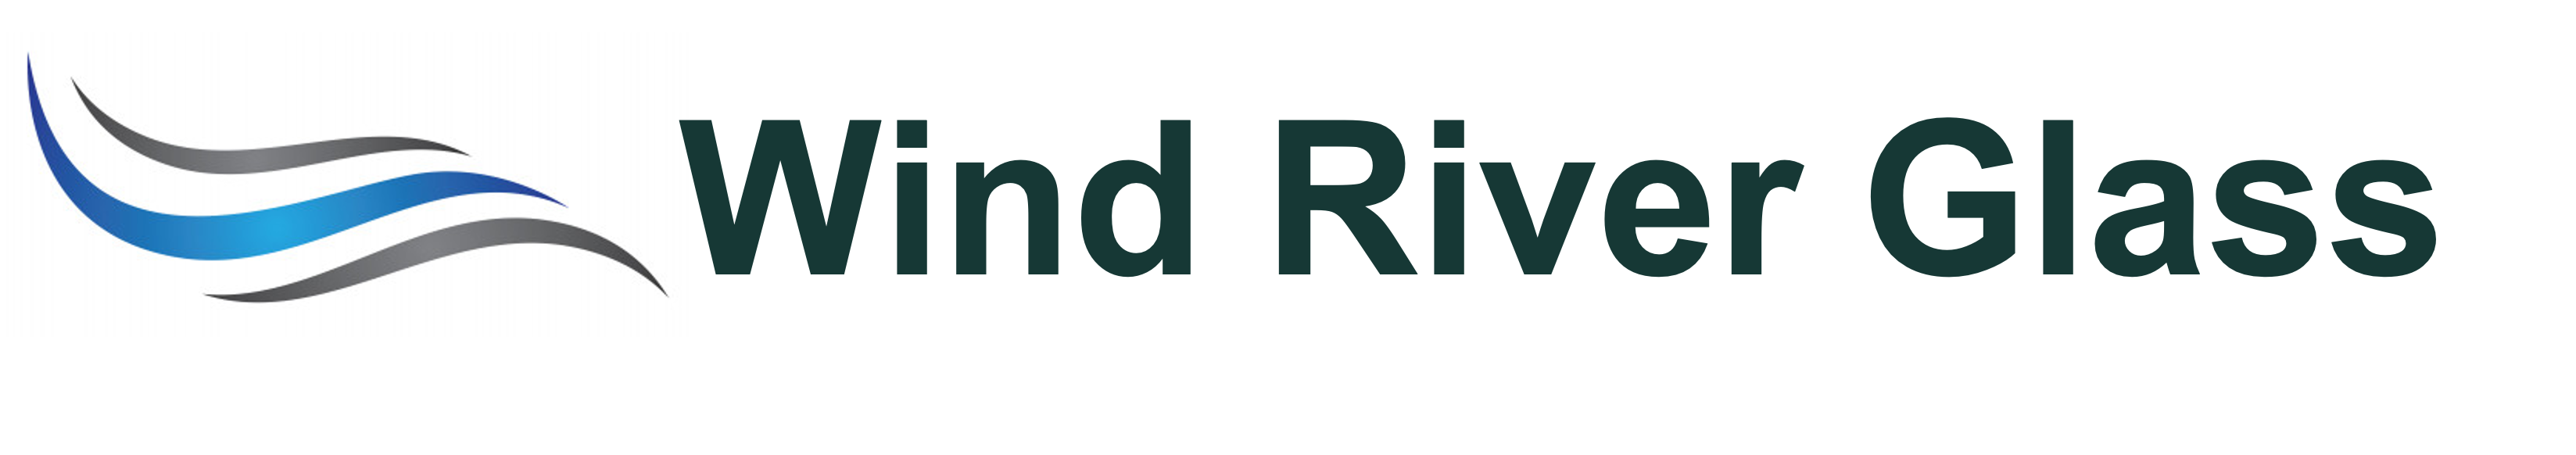 wind river glass logo